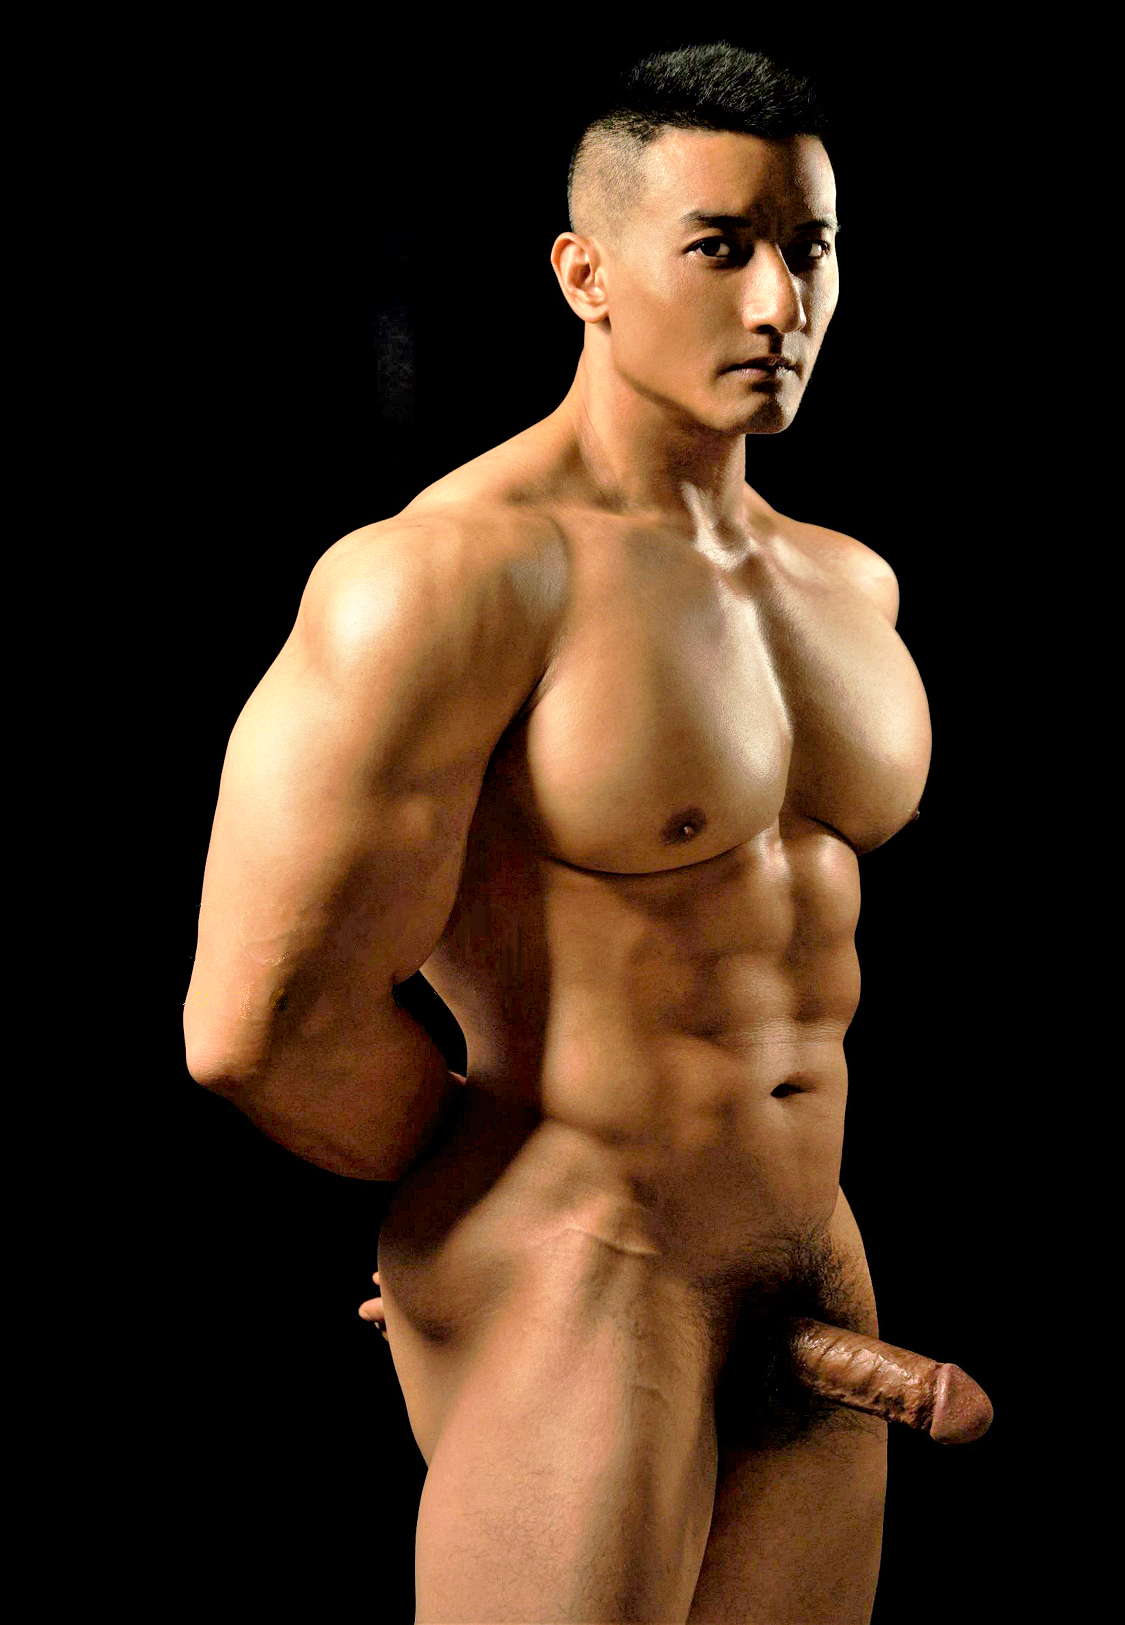 Nude bodybuilder posing